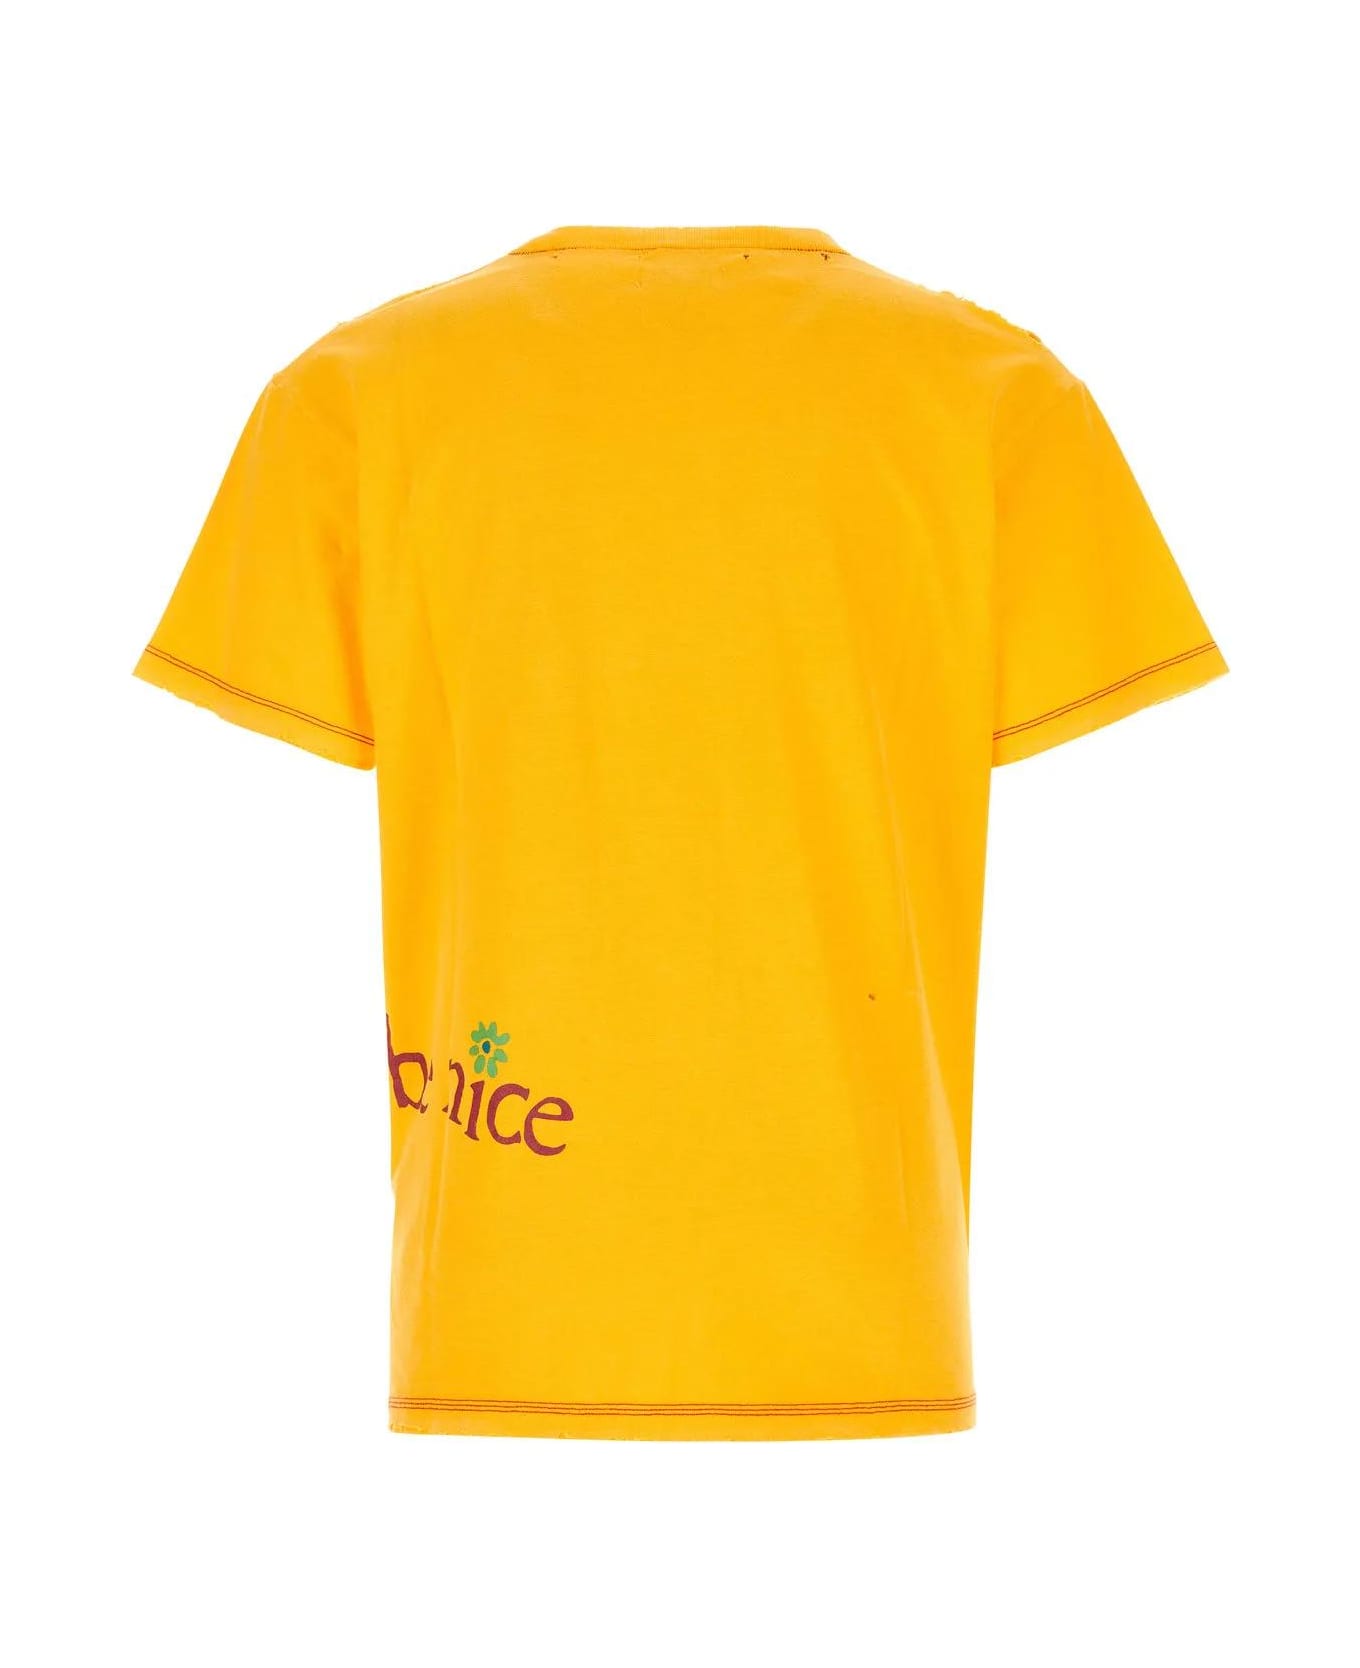 ERL Yellow Cotton Blend T-shirt - Yellow